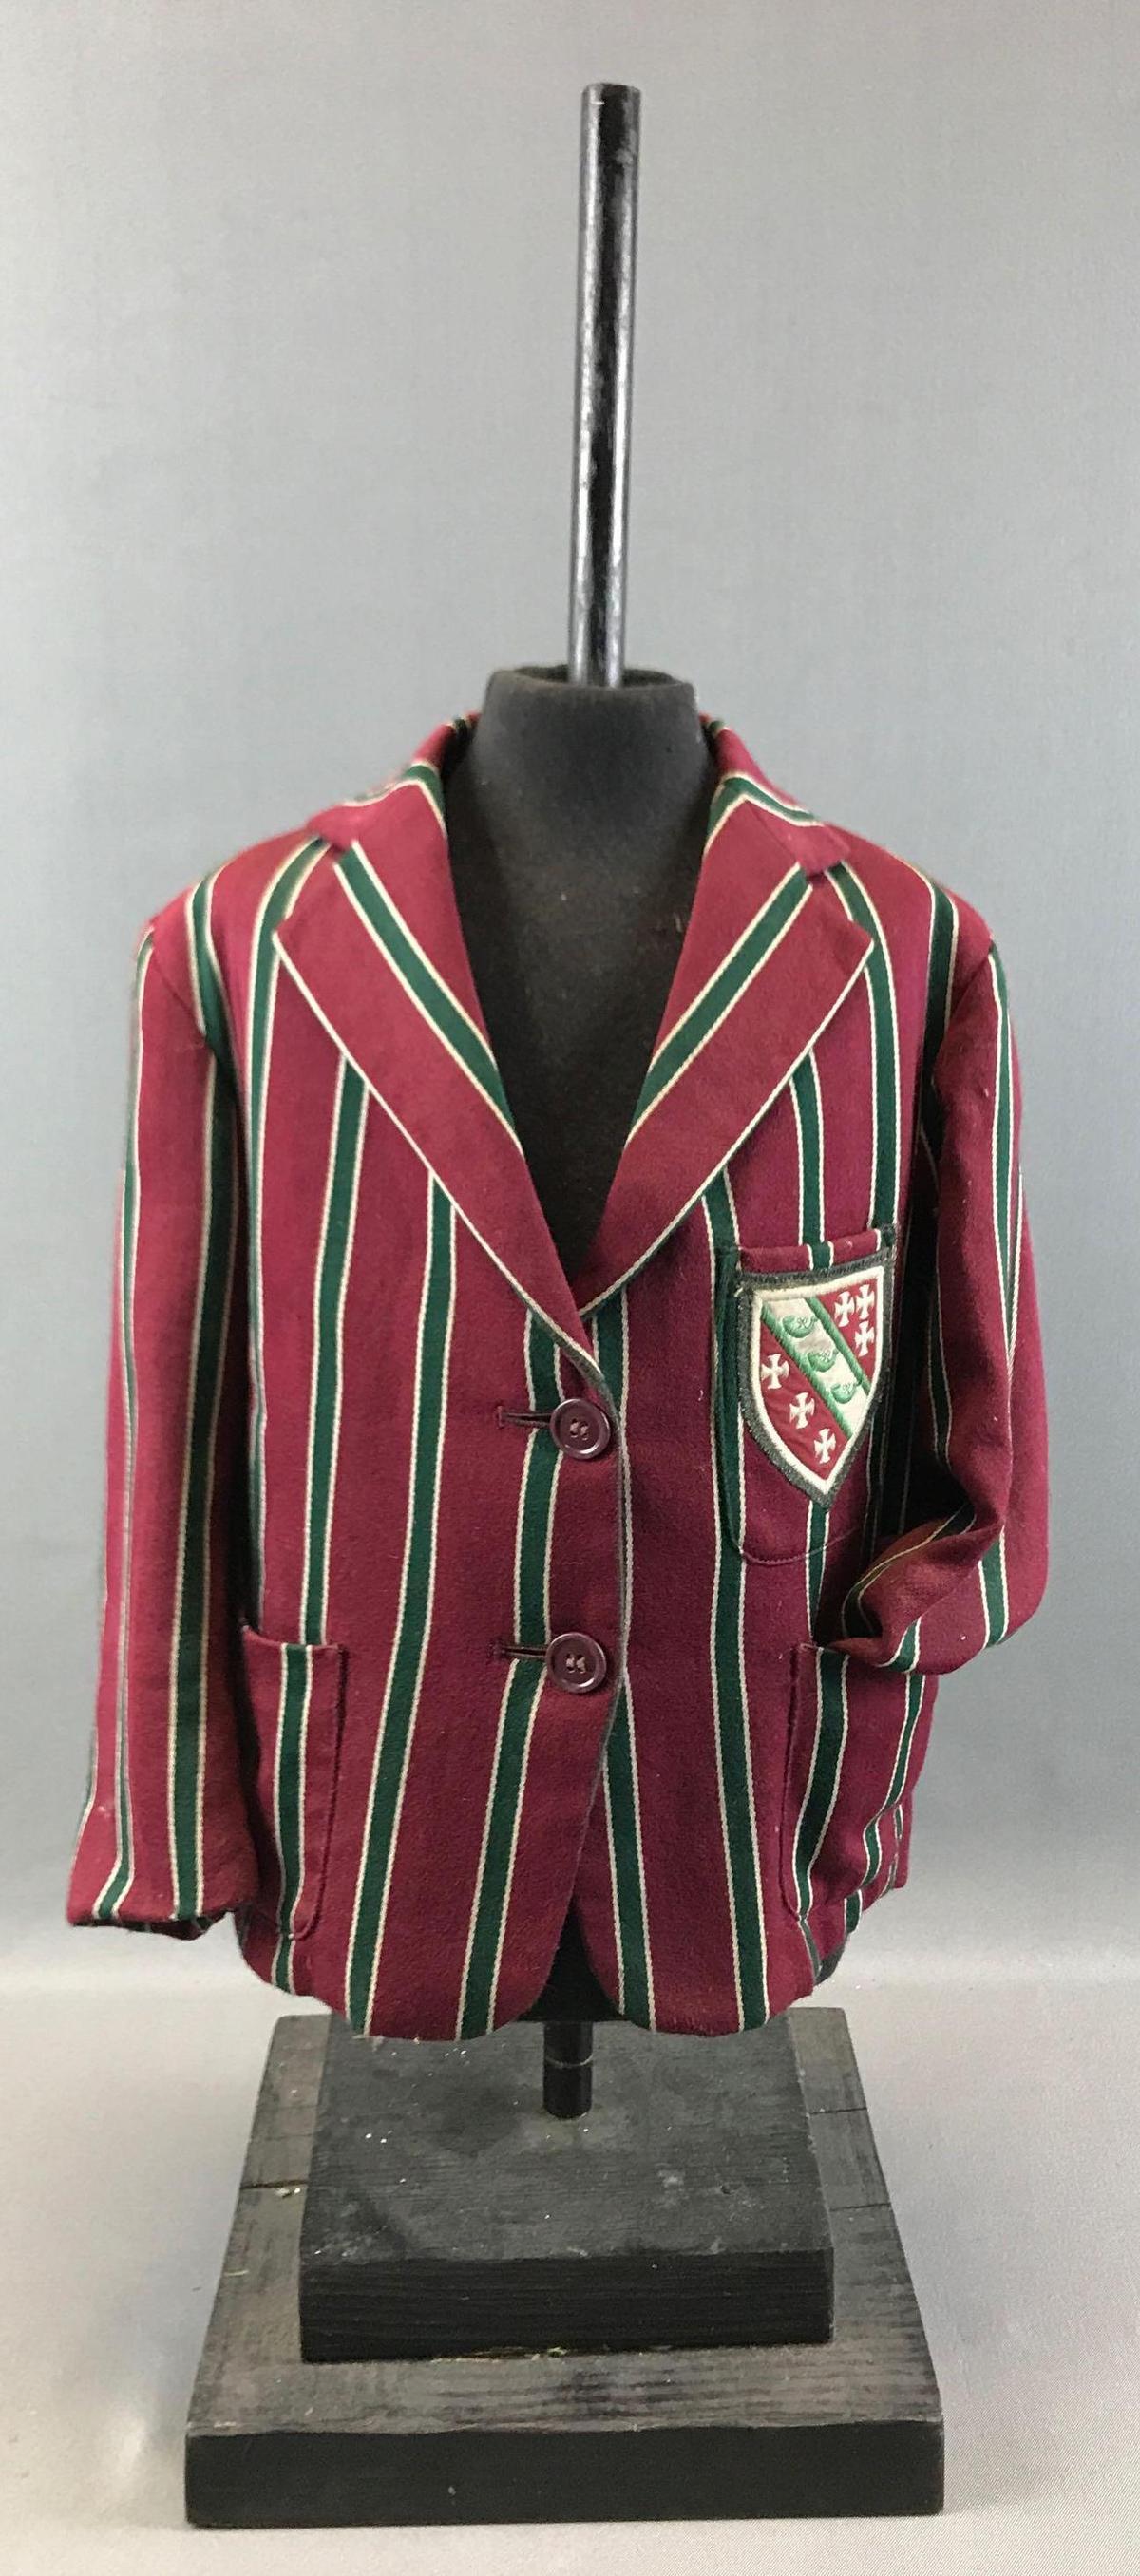 Vintage "Rawcliffes" School Uniform Jacket and Clothing Form